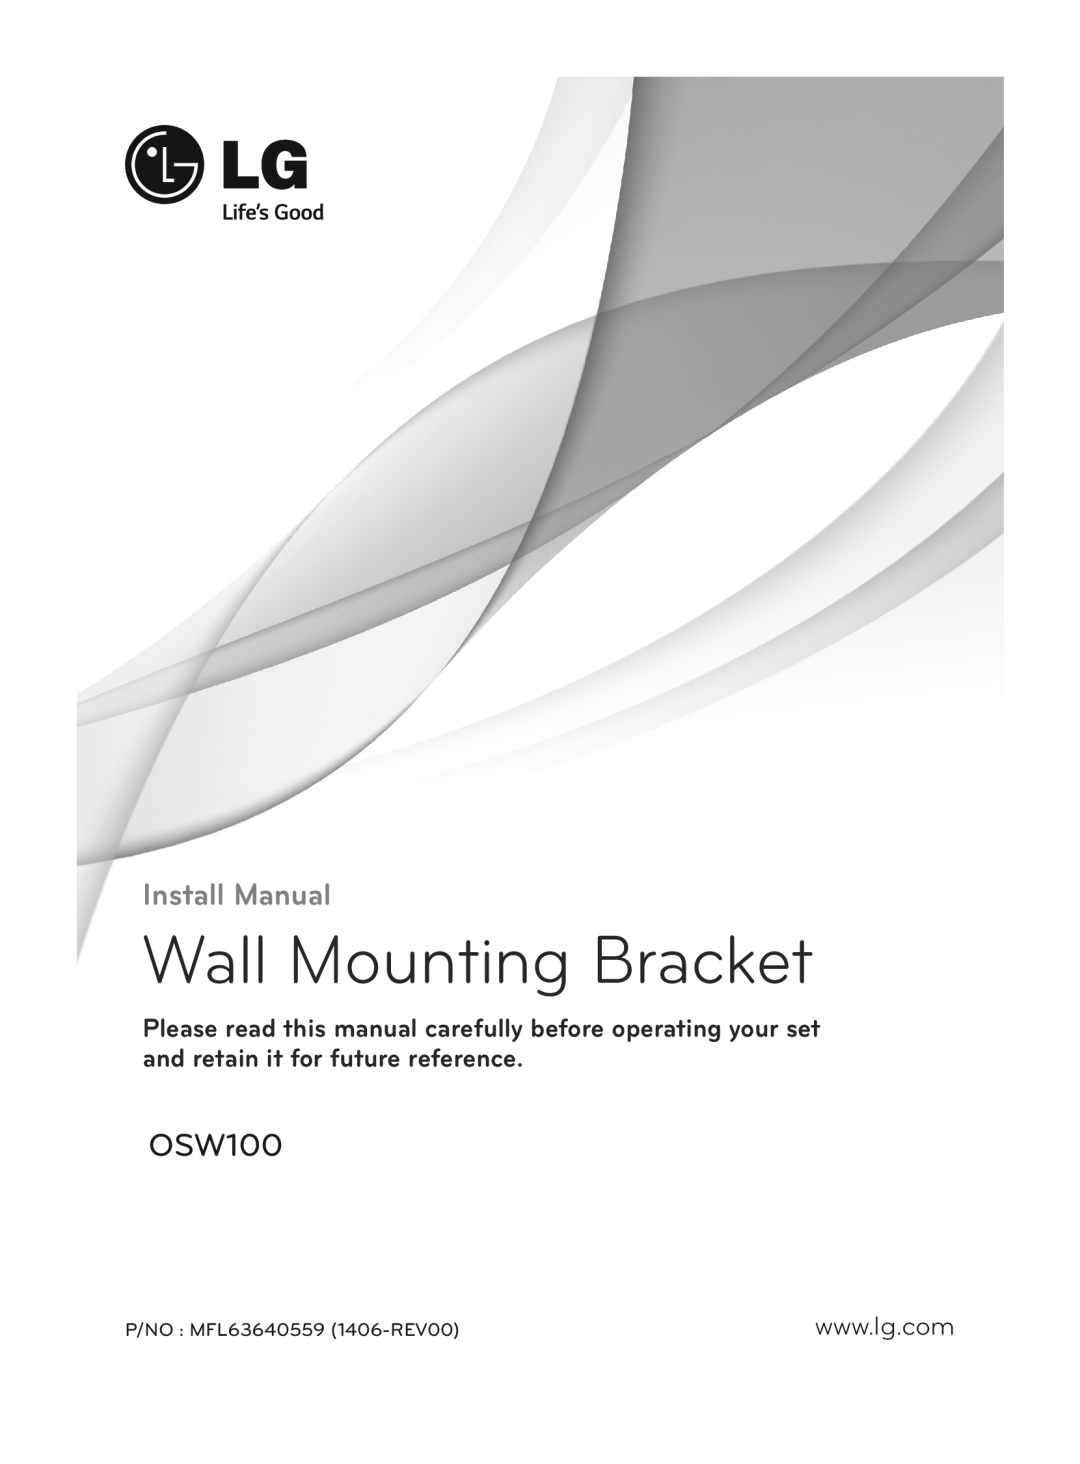 LG Electronics OSW100 install manual Wall Mounting Bracket, Install Manual, P/NO MFL63640559 1406-REV00 